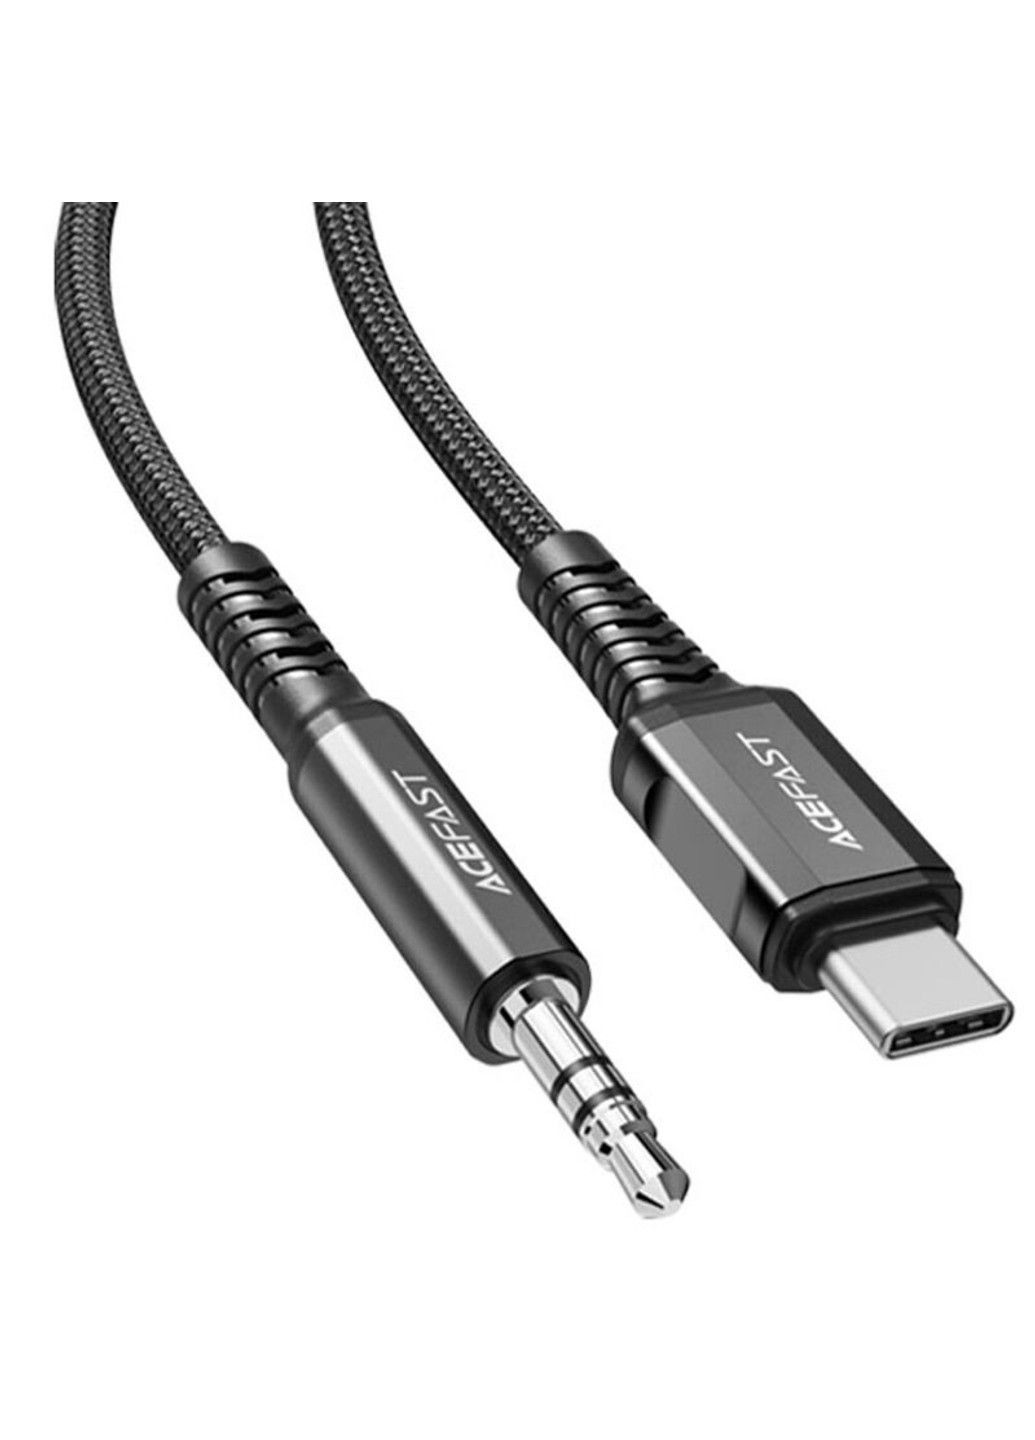 Перехідник C1-08 USB-C to 3.5mm aluminum alloy Acefast (291879243)